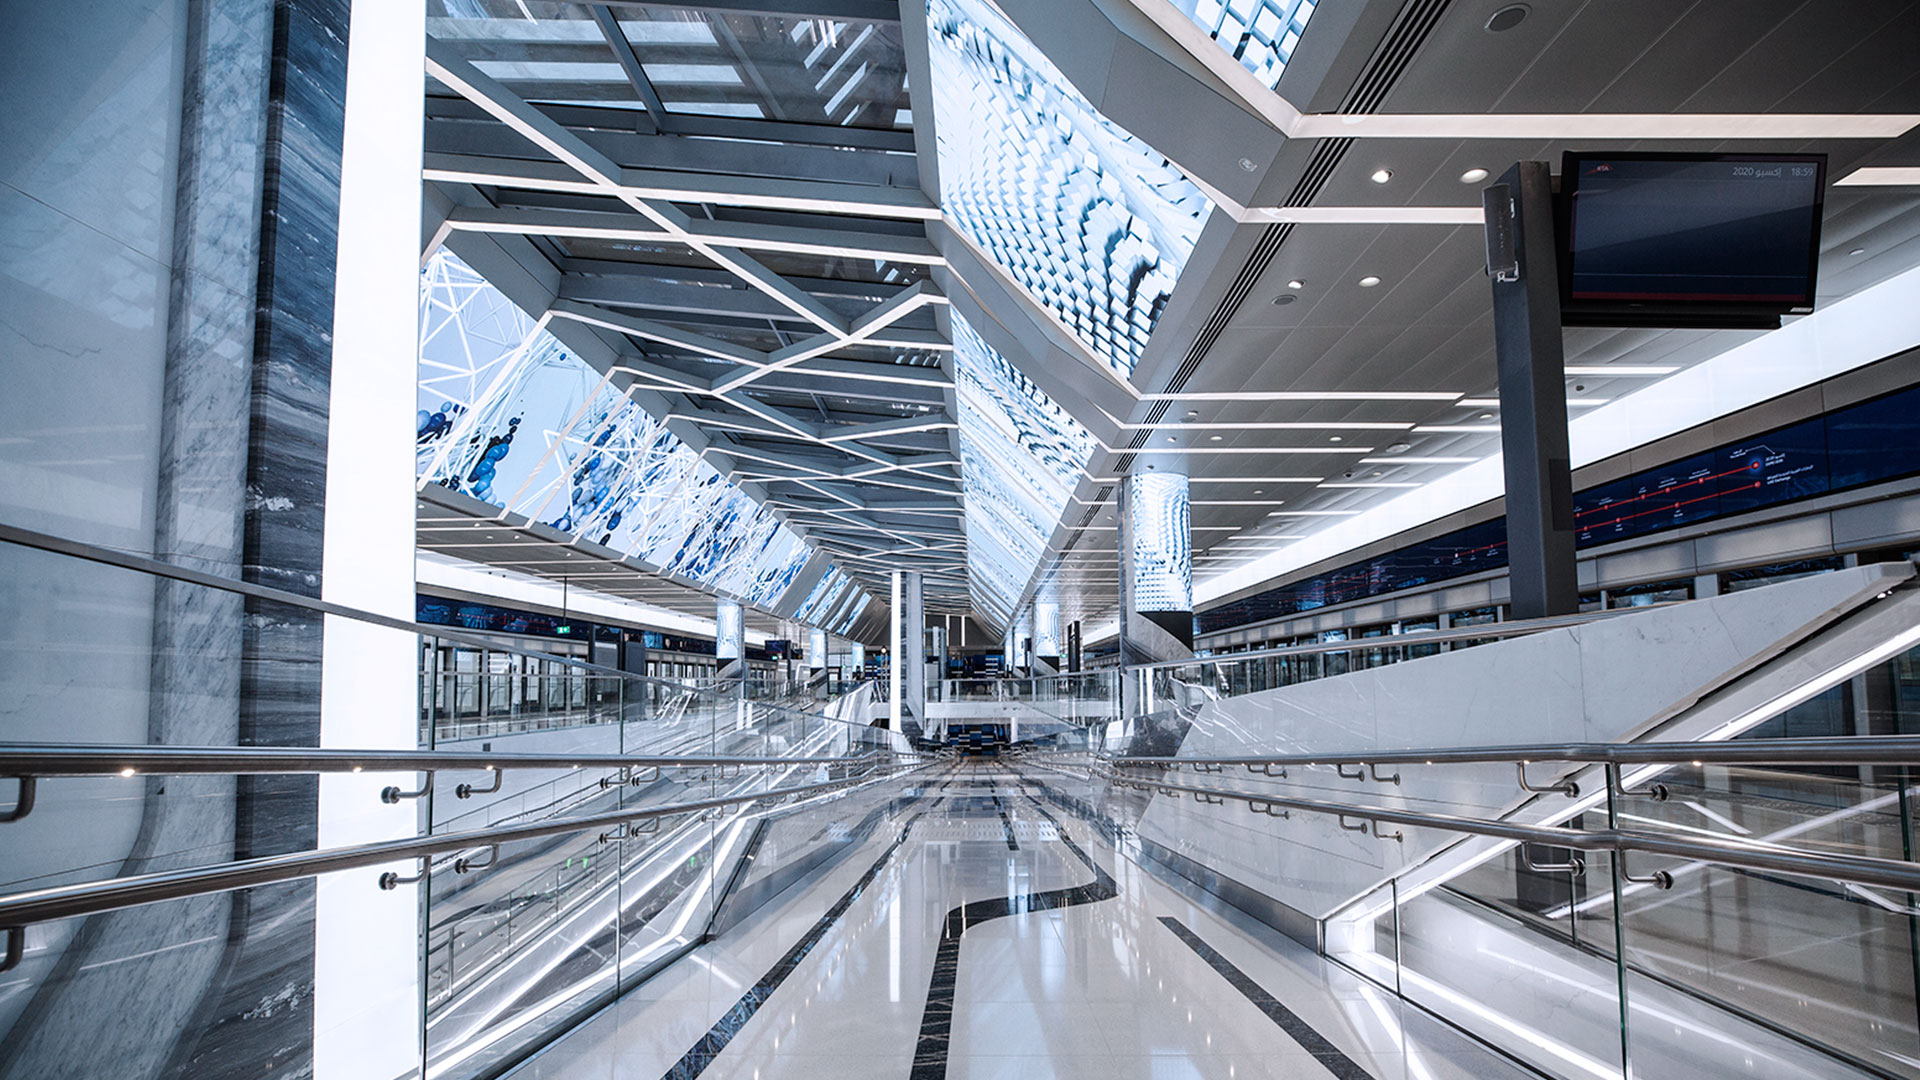 EXPO 2020 Metro Station Dubai  by Hotaru Visual Guerrilla - Creative Work